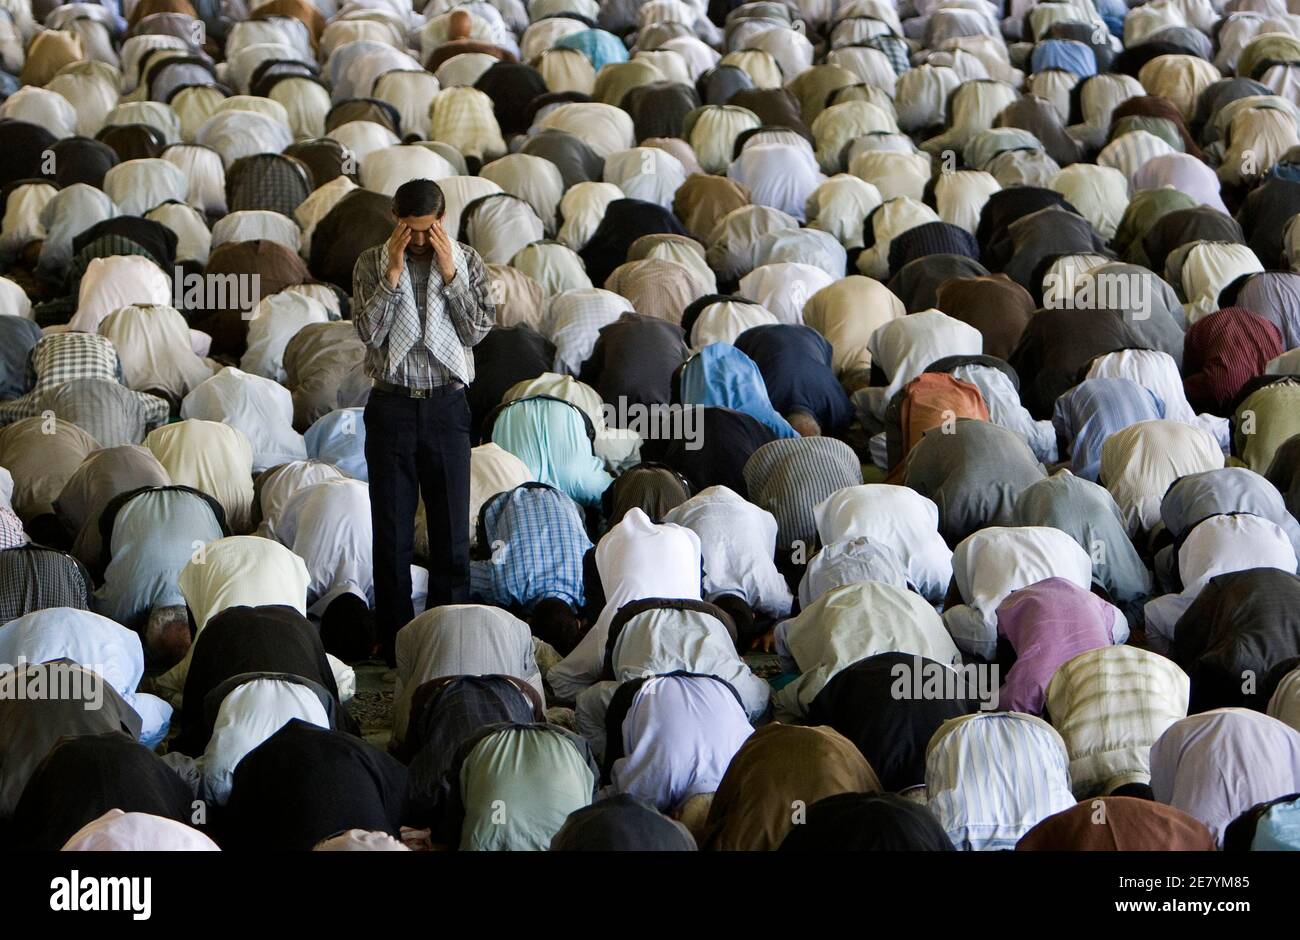 Worshippers attend Friday prayers in Tehran October 2, 2009. REUTERS/Raheb Homavandi (IRAN RELIGION SOCIETY) Stock Photo